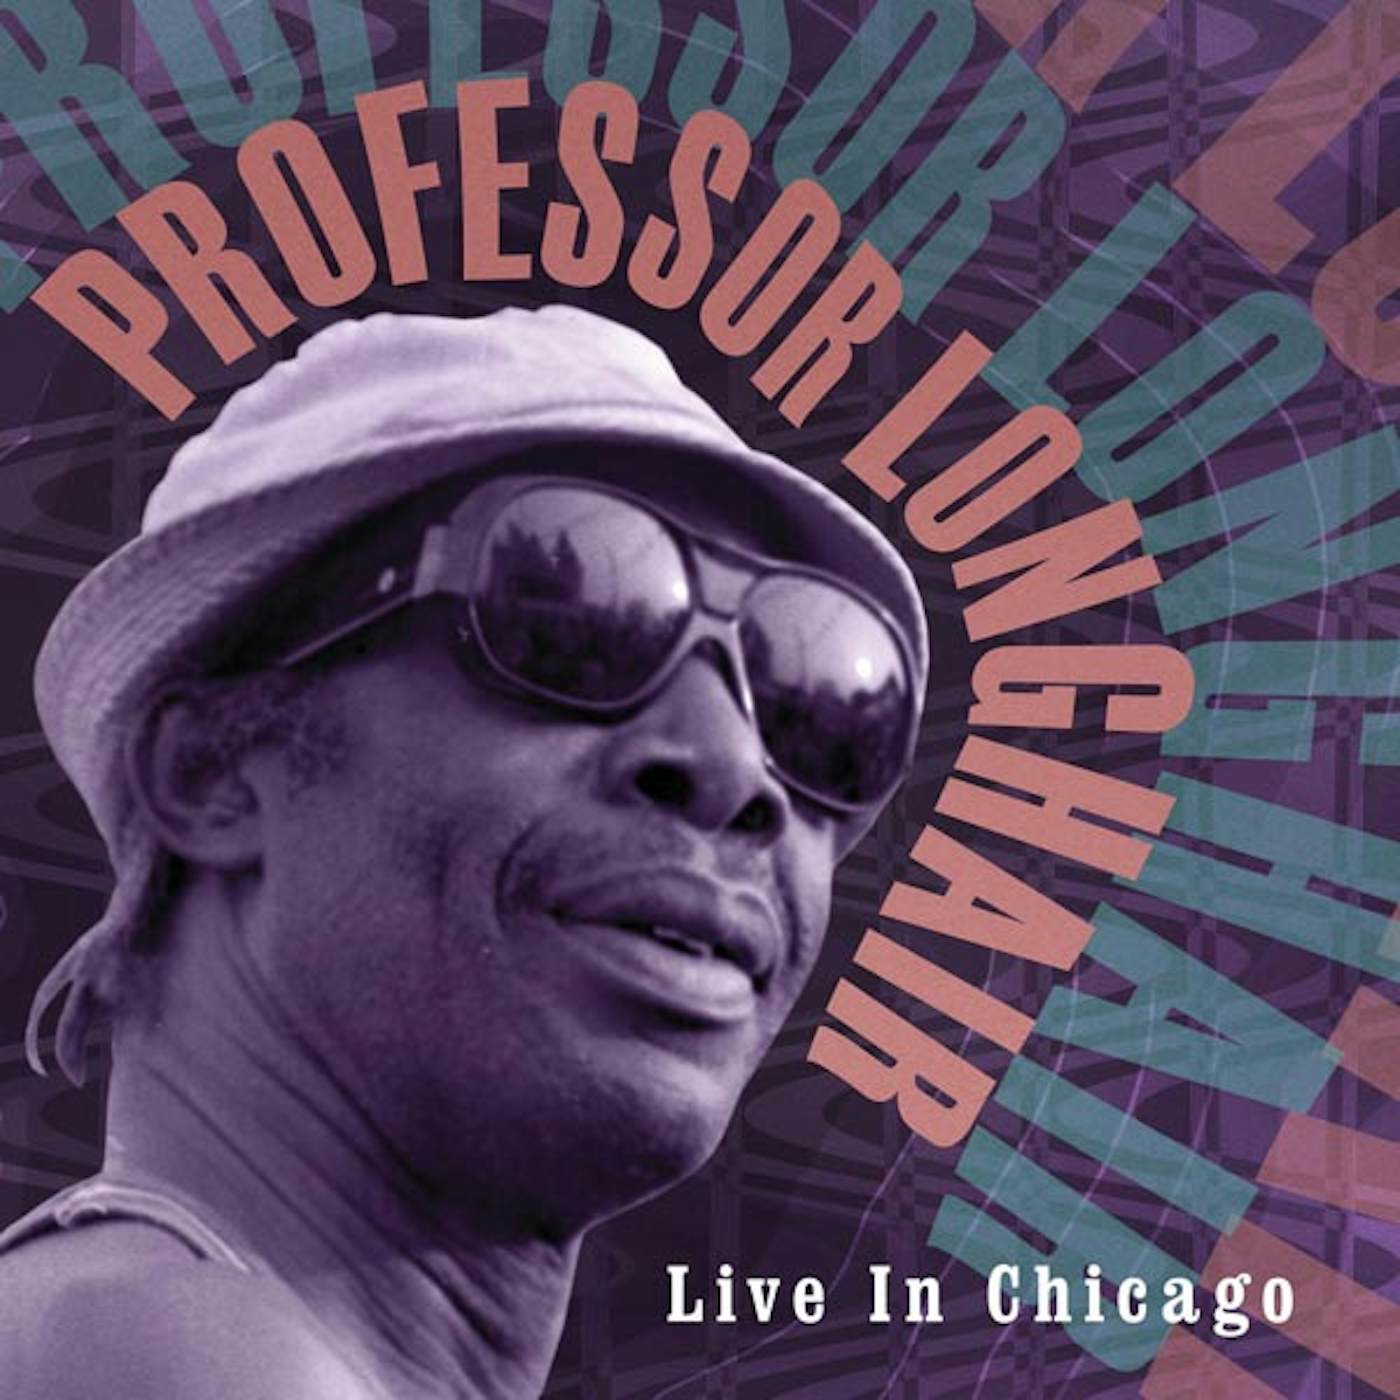 Professor Longhair LIVE IN CHICAGO (180G) Vinyl Record